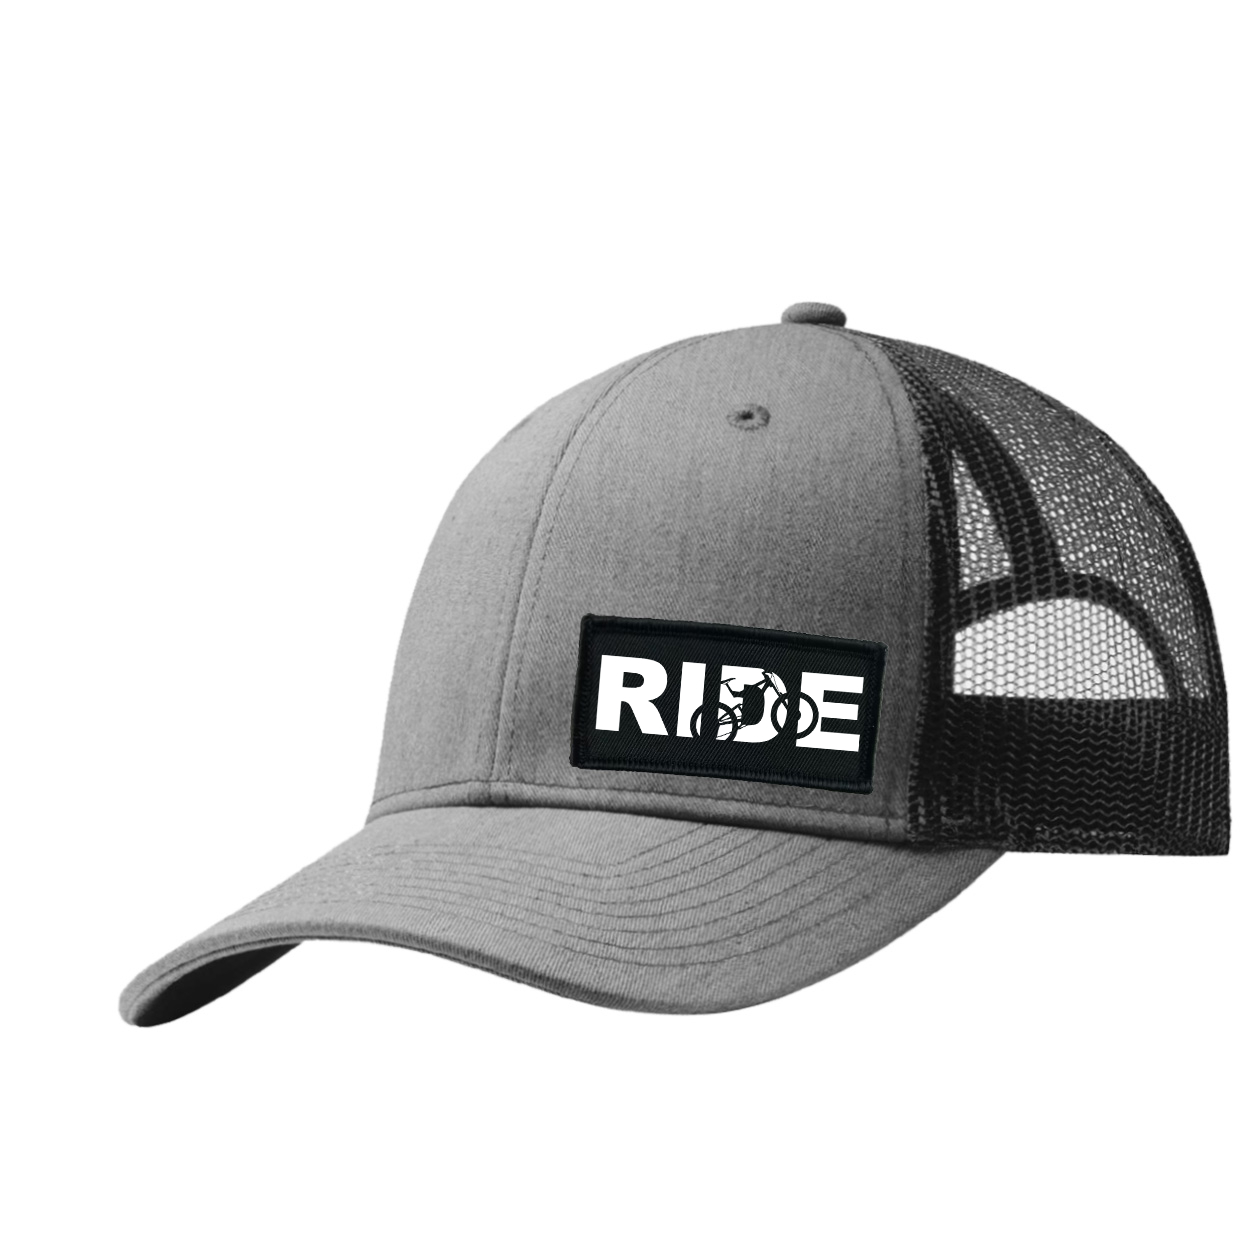 Ride MTB Logo Night Out Woven Patch Snapback Trucker Hat Heather Gray/Black (White Logo)